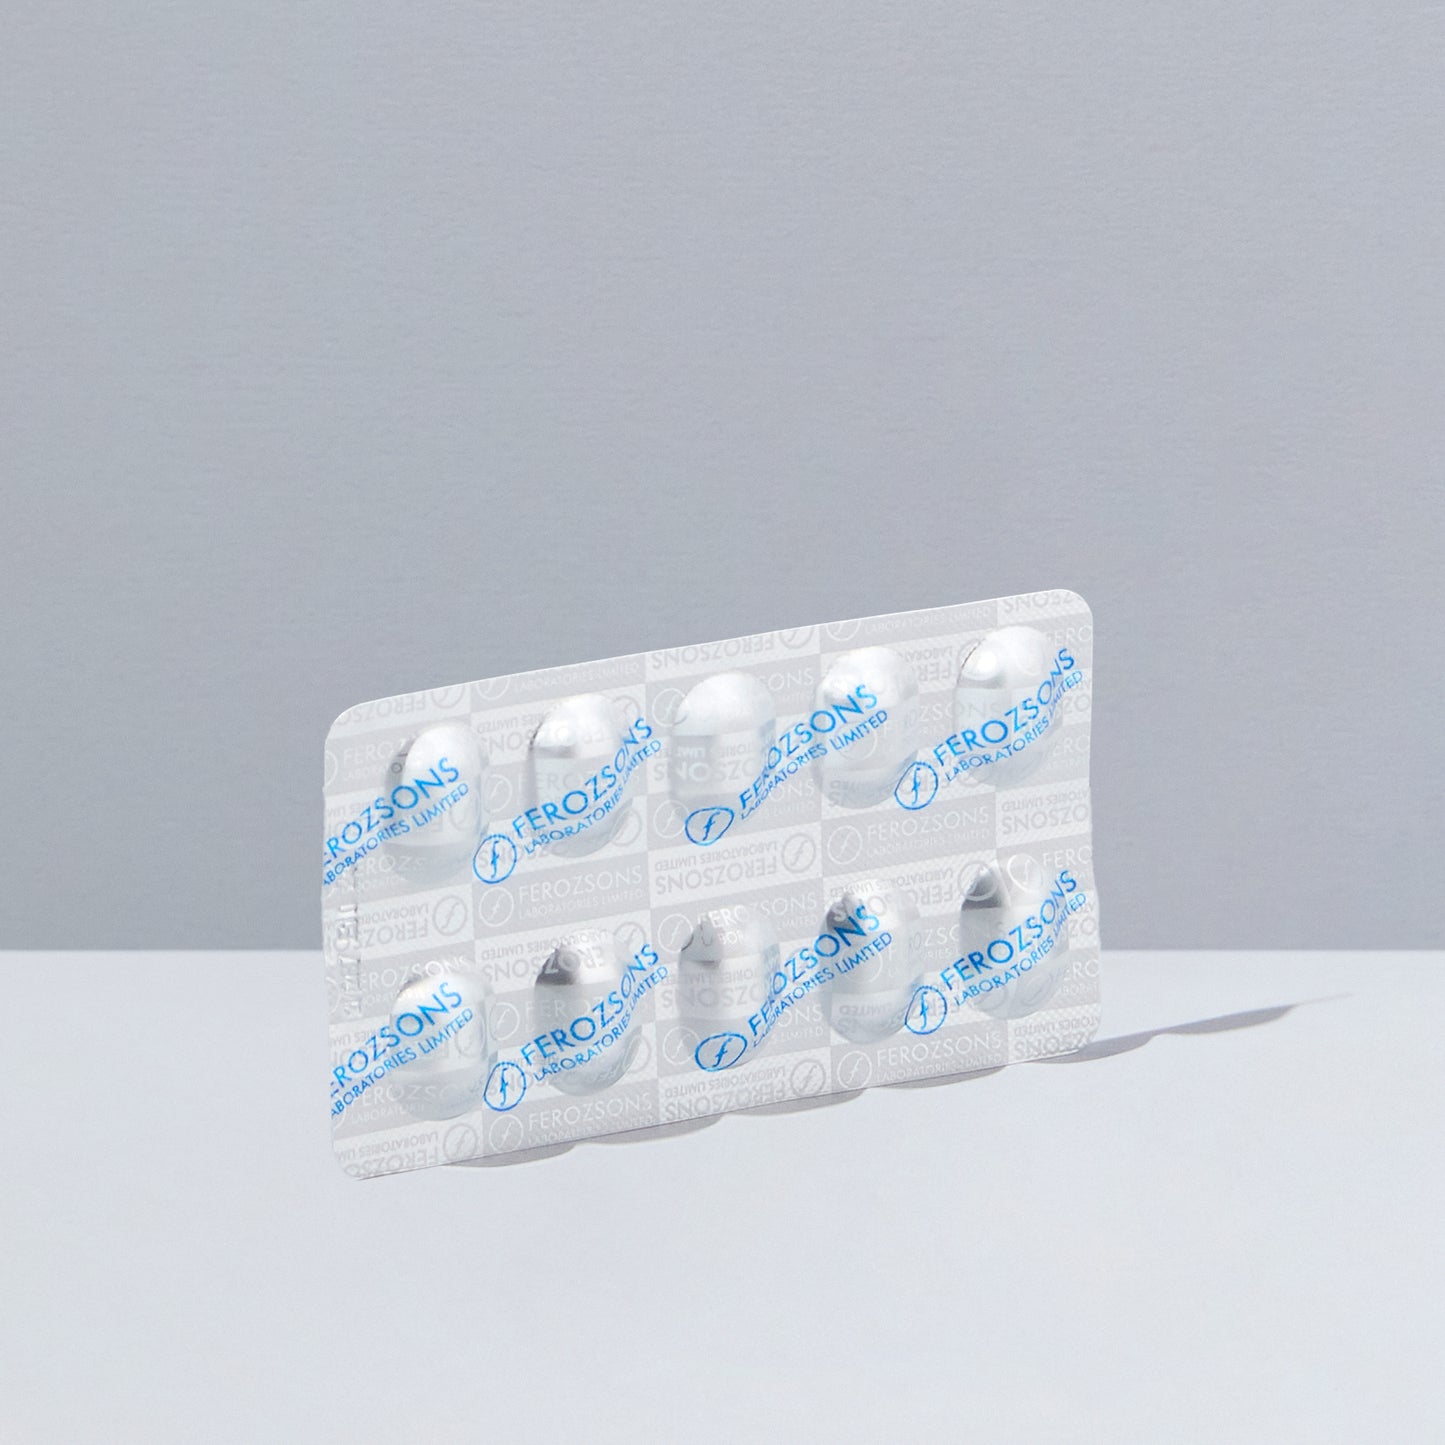 [Rx] AURORA Rosuvastatin Calcium Tablet 10mg (Per Tablet)* | DMD Patient-Exclusive